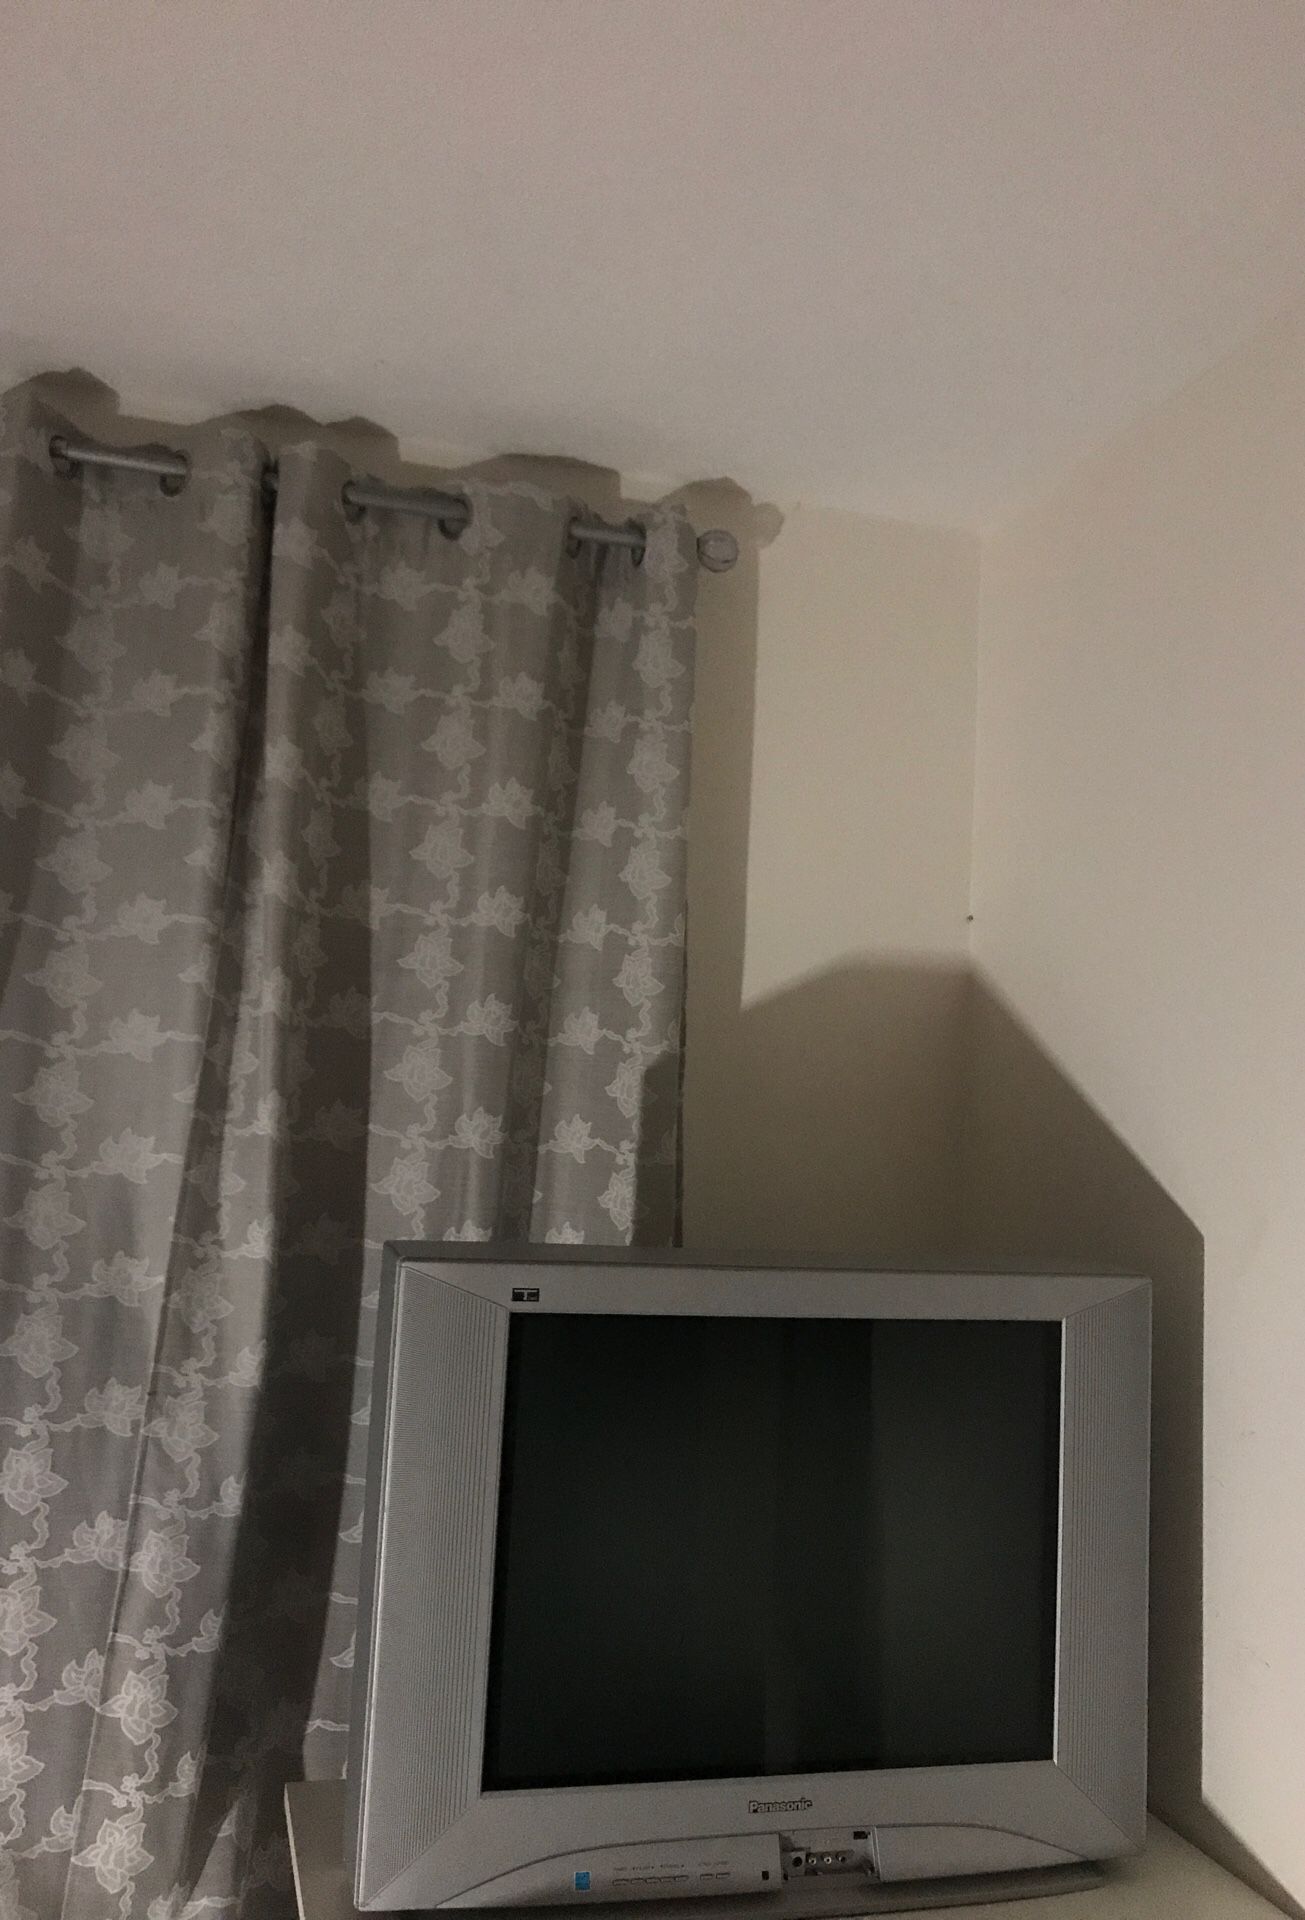 Tv Panasonic in good condition